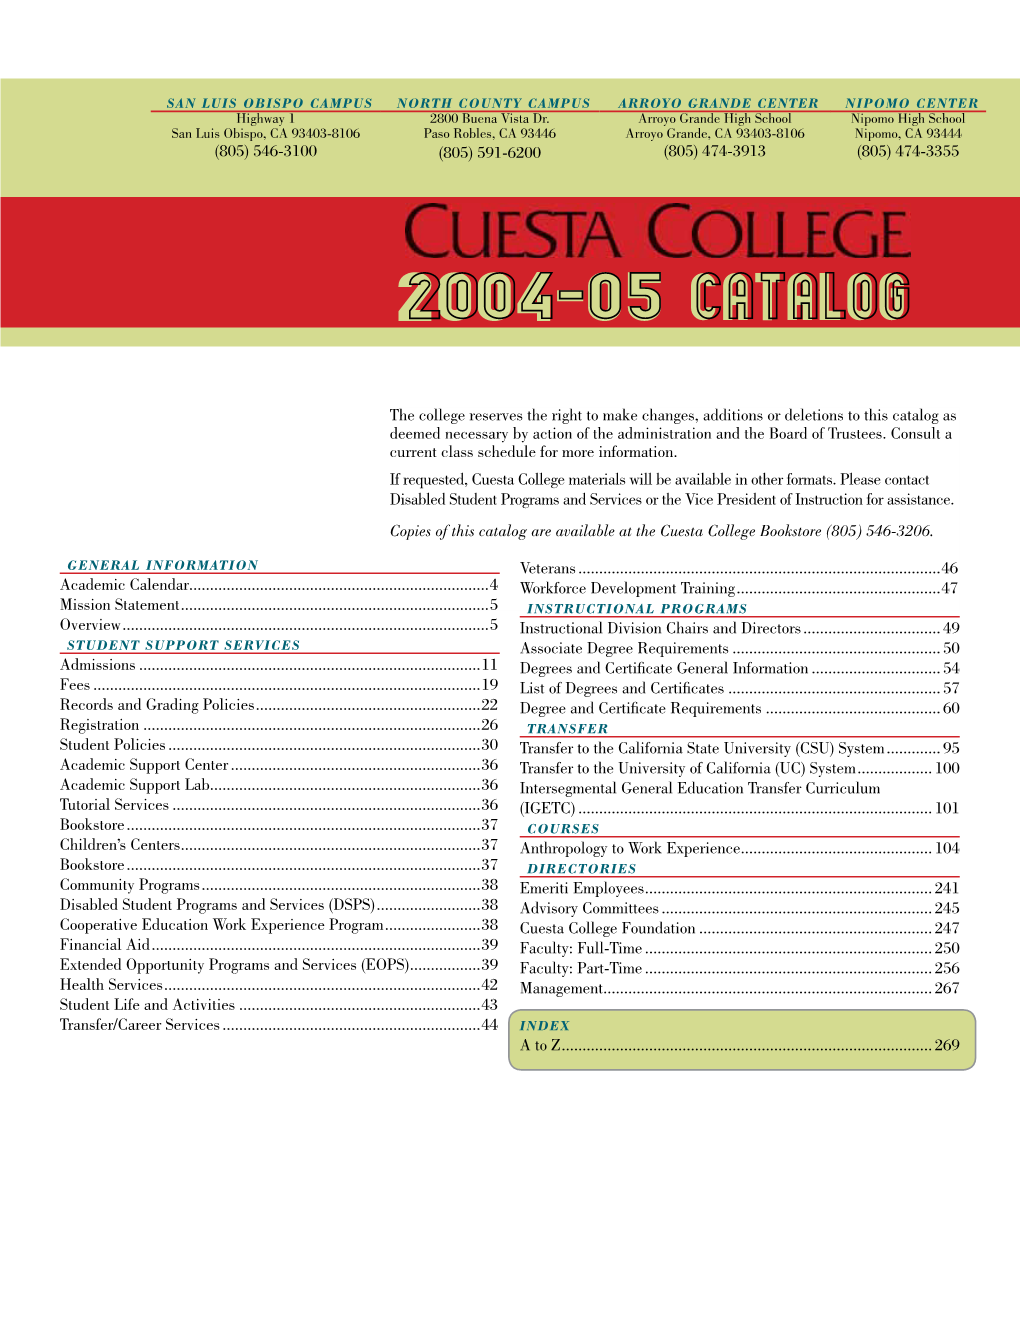 2004-05 Catalog